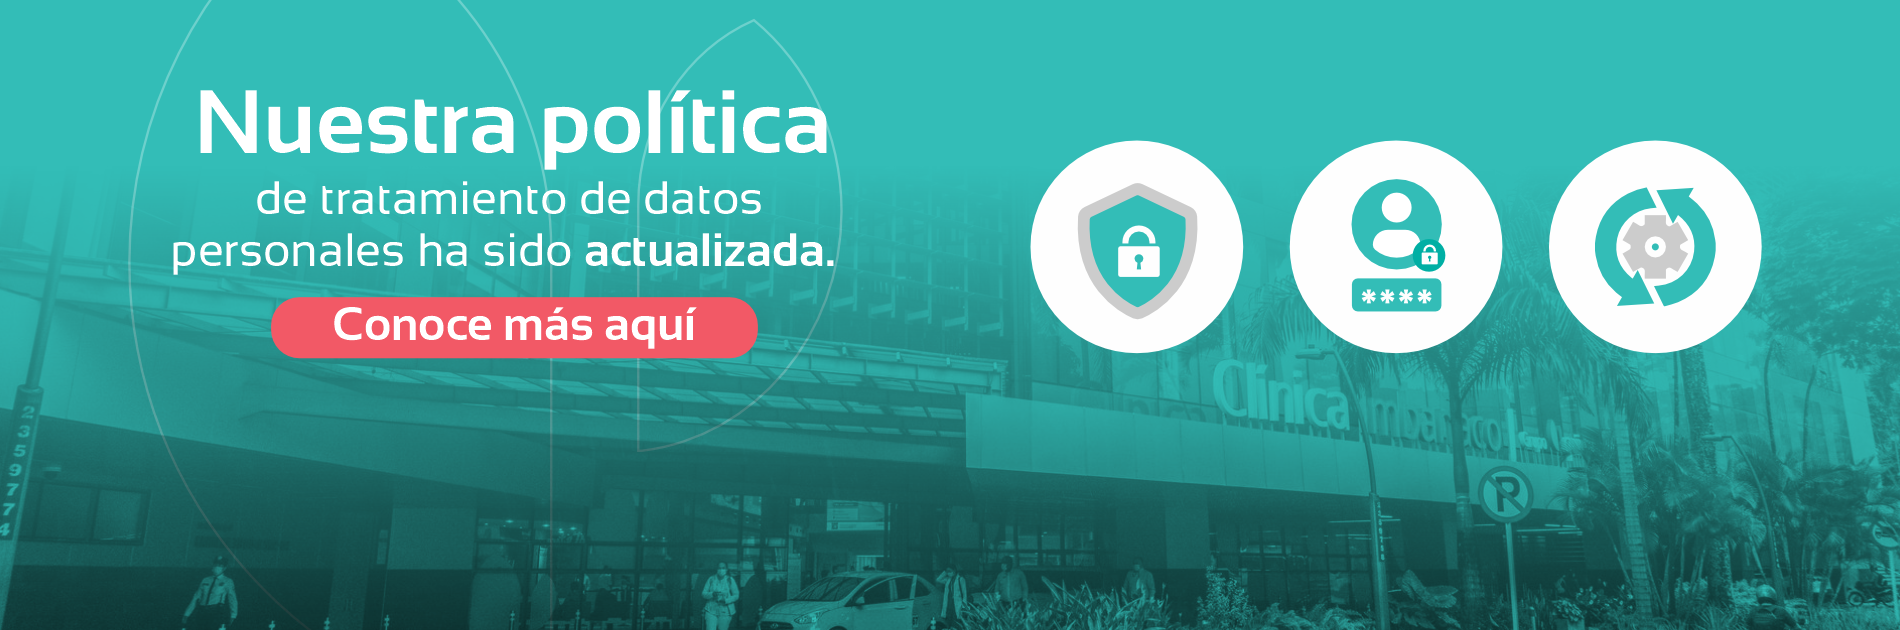 banner-nueva-politica-de-datos-clinica-imbanaco